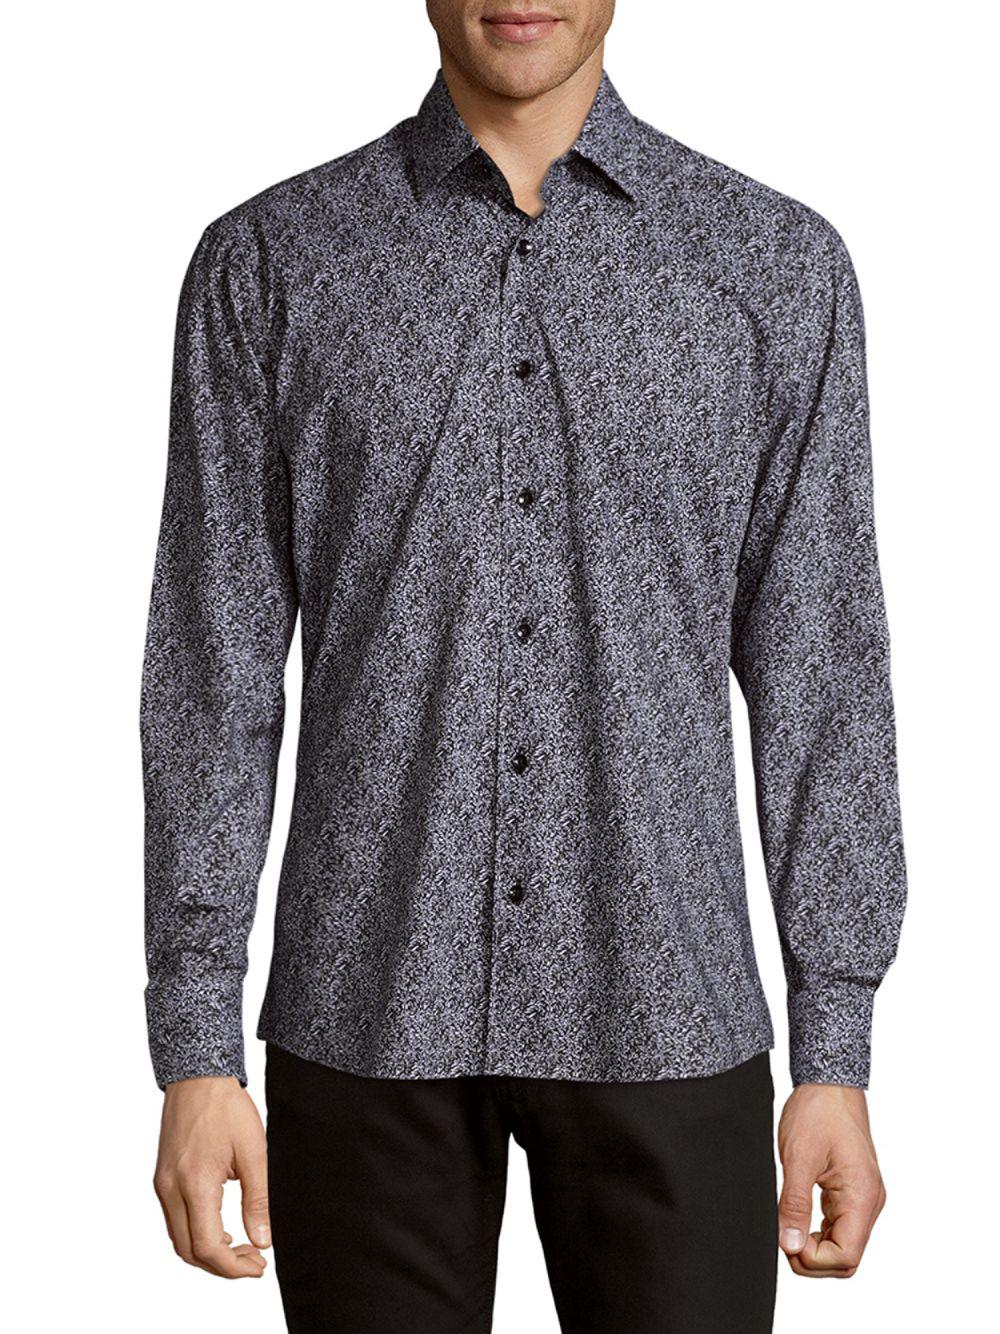 Bertigo Cotton Static Button-down Shirt in Black for Men - Lyst